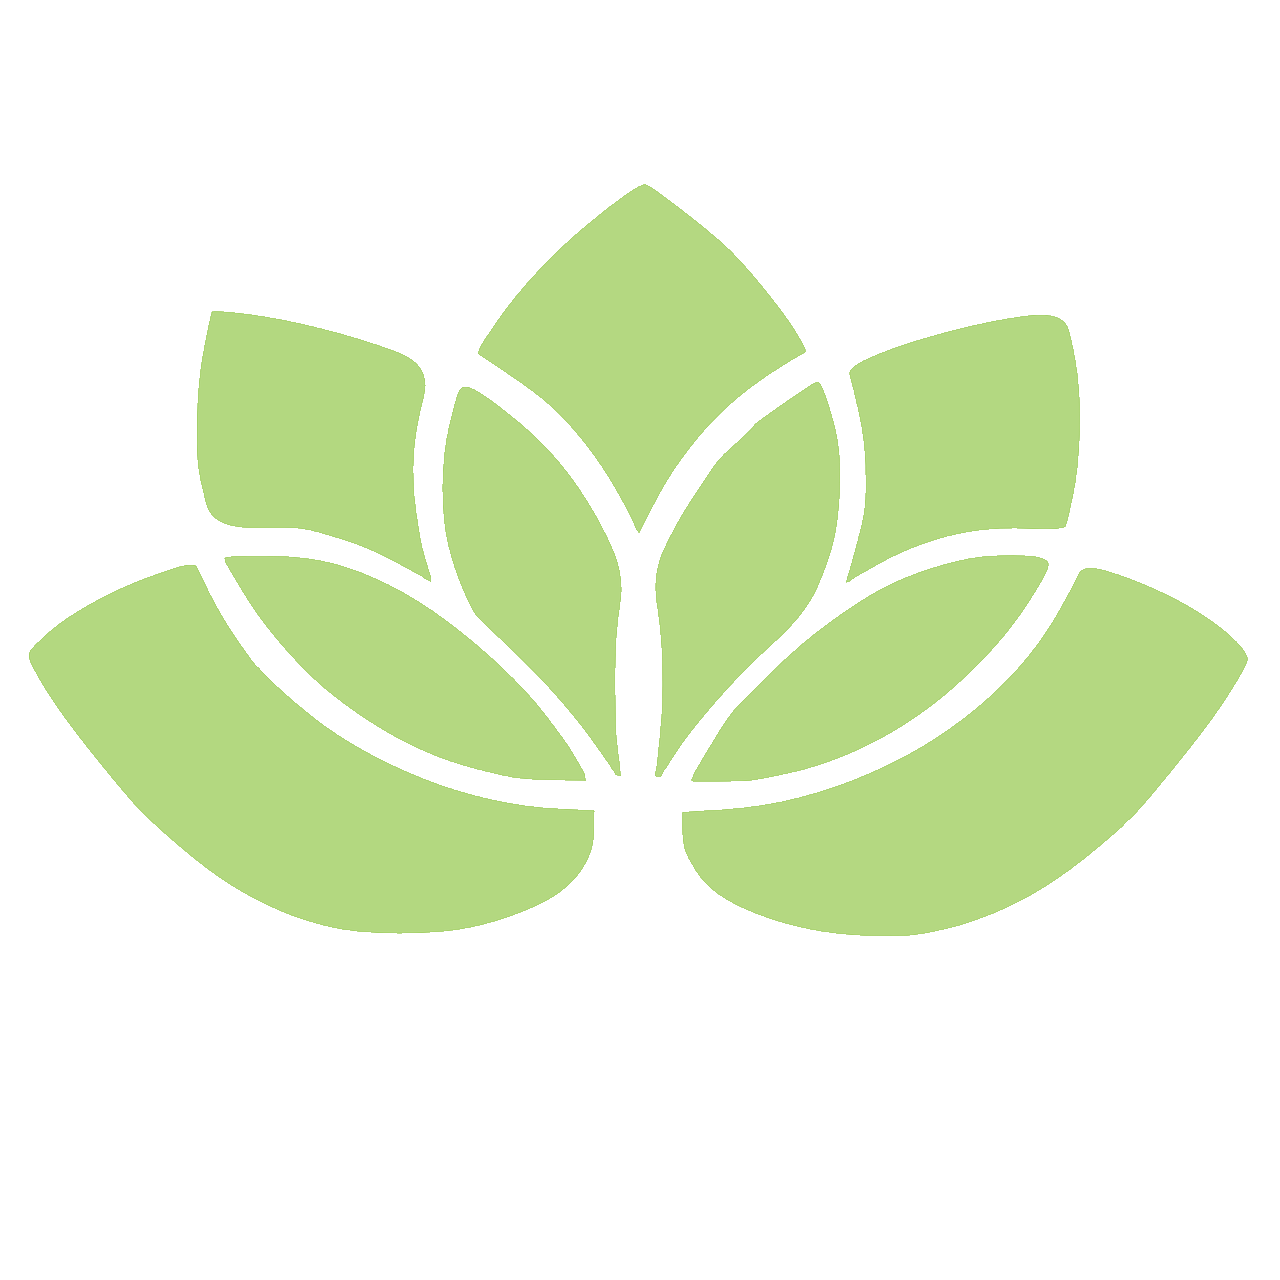 Blog goorus. Meditation clipart yoga meditation